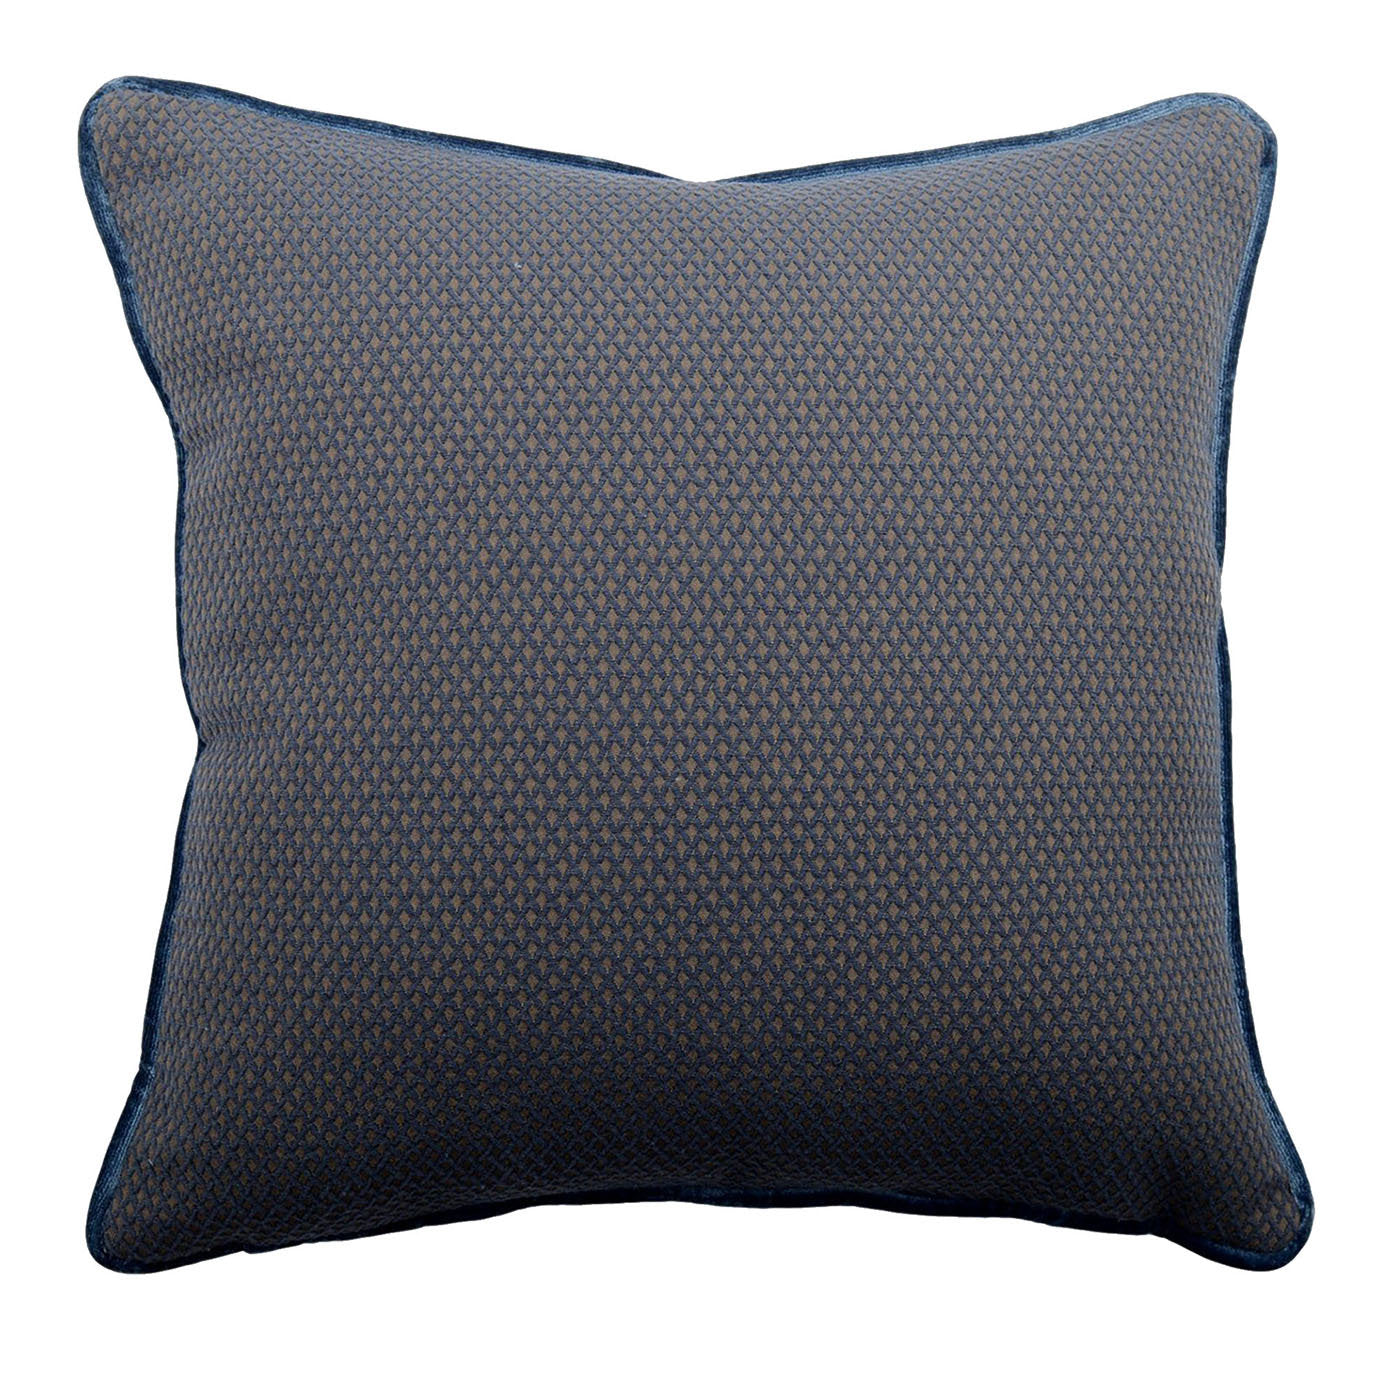 Blue Beige Carré Cushion in false unit jacquard fabric - Main view